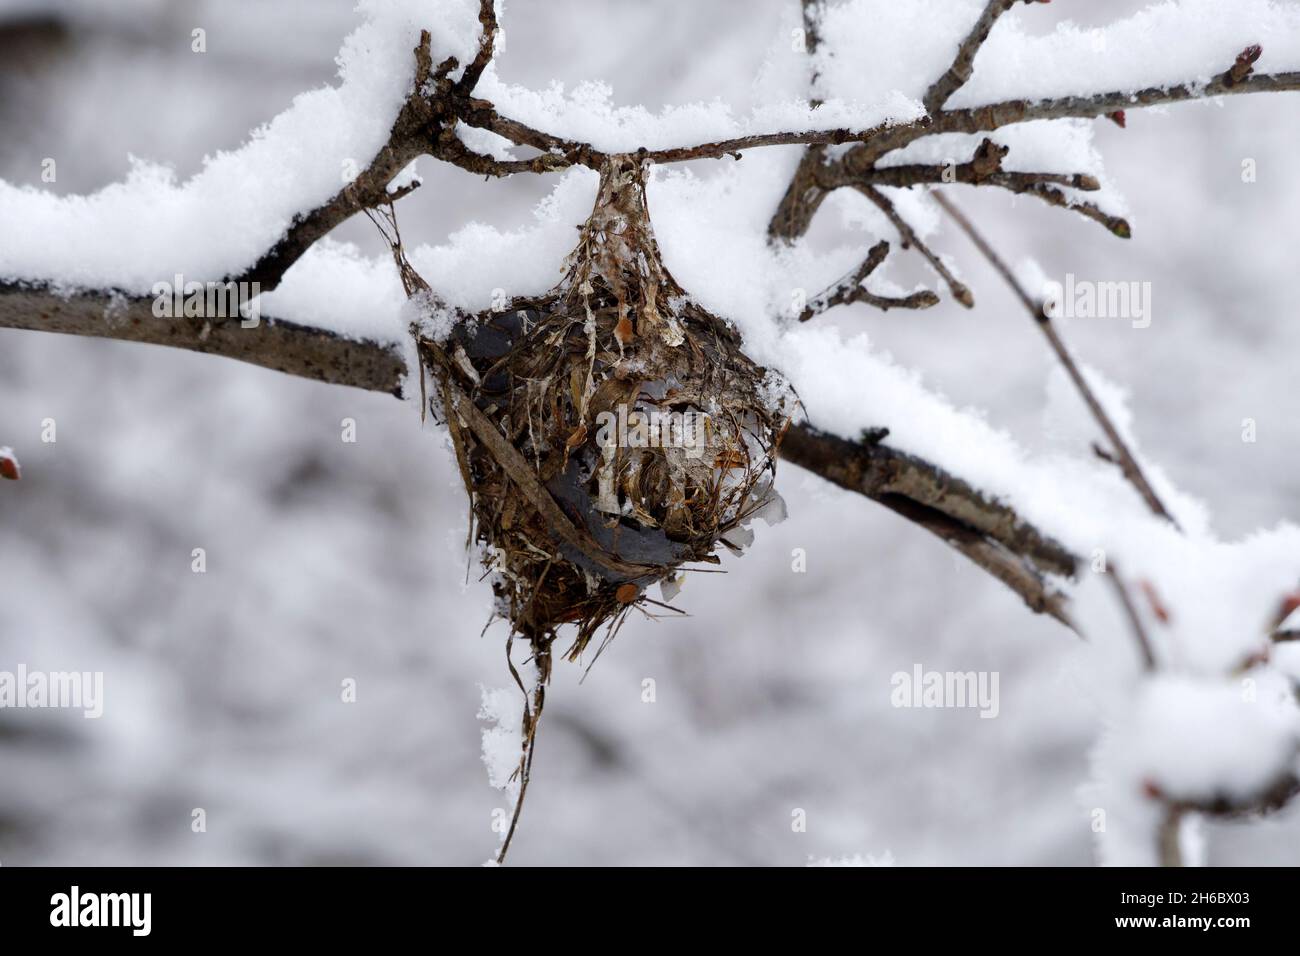 Warbling Vireo, Vireo gilvus nest in snow, early winter snowfall, Wisconsin, USA Stock Photo